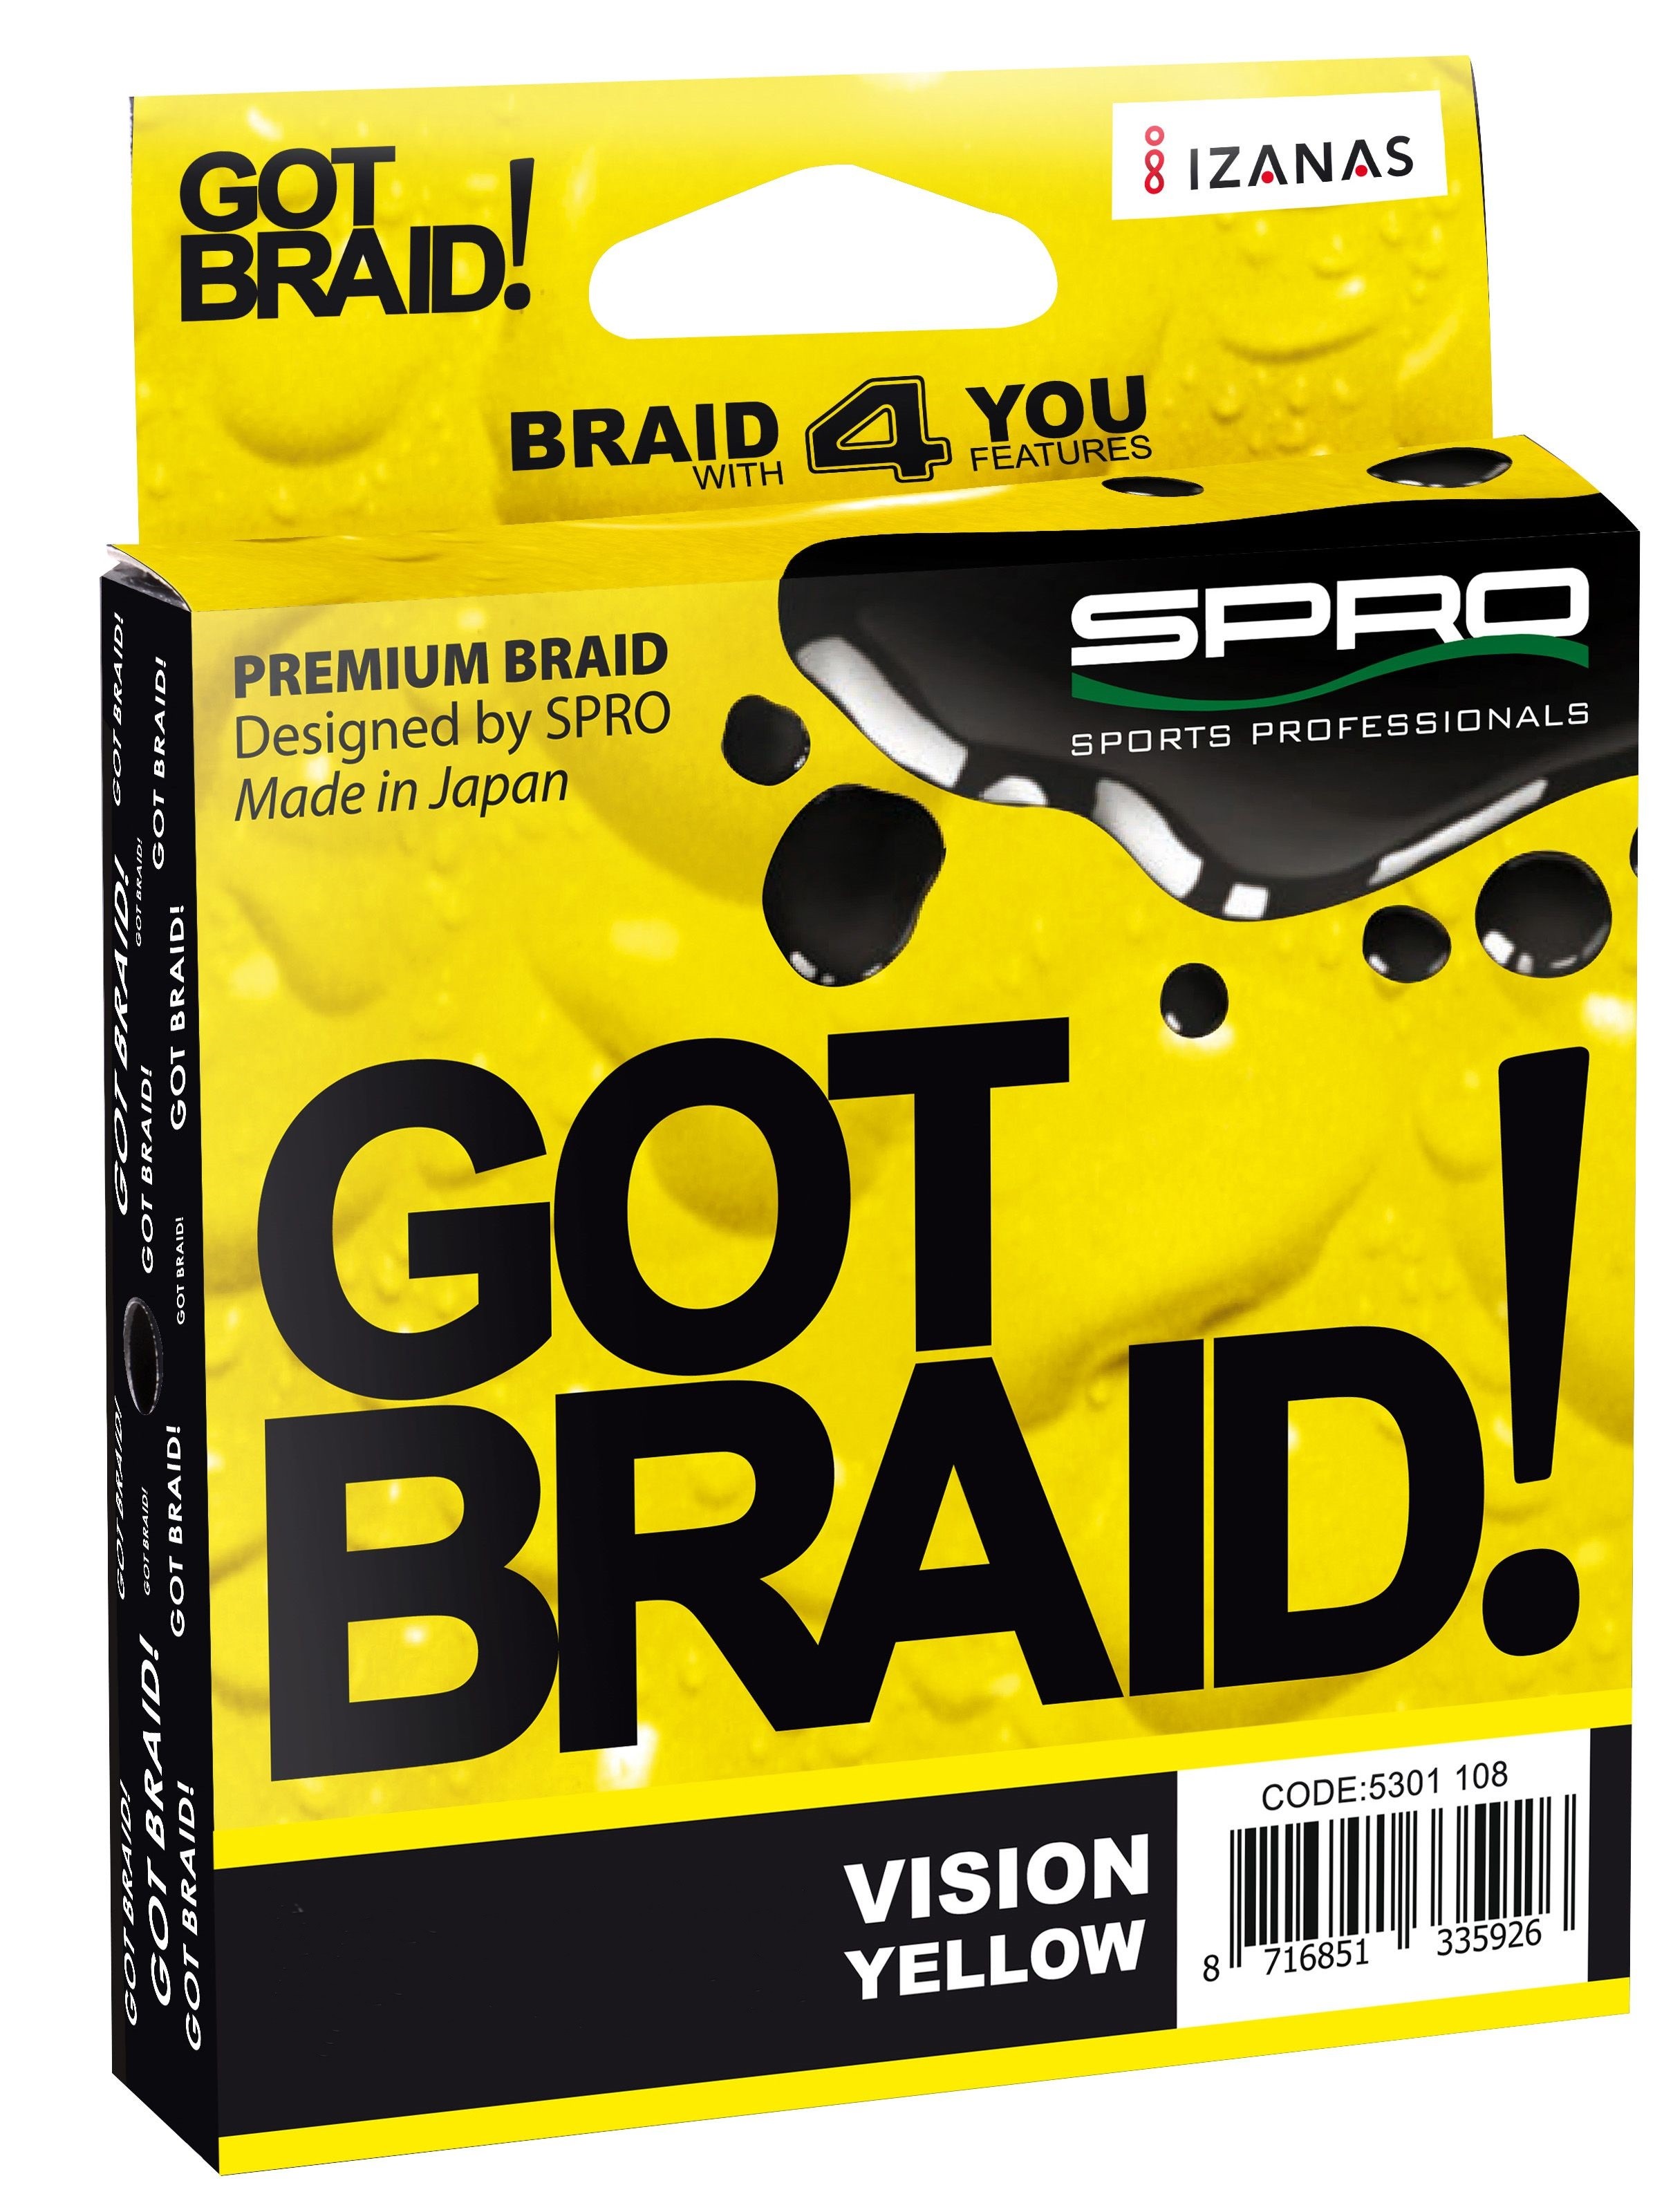 Леска SPRO Got Braid! Yellow 0,22мм 150м - фото 1